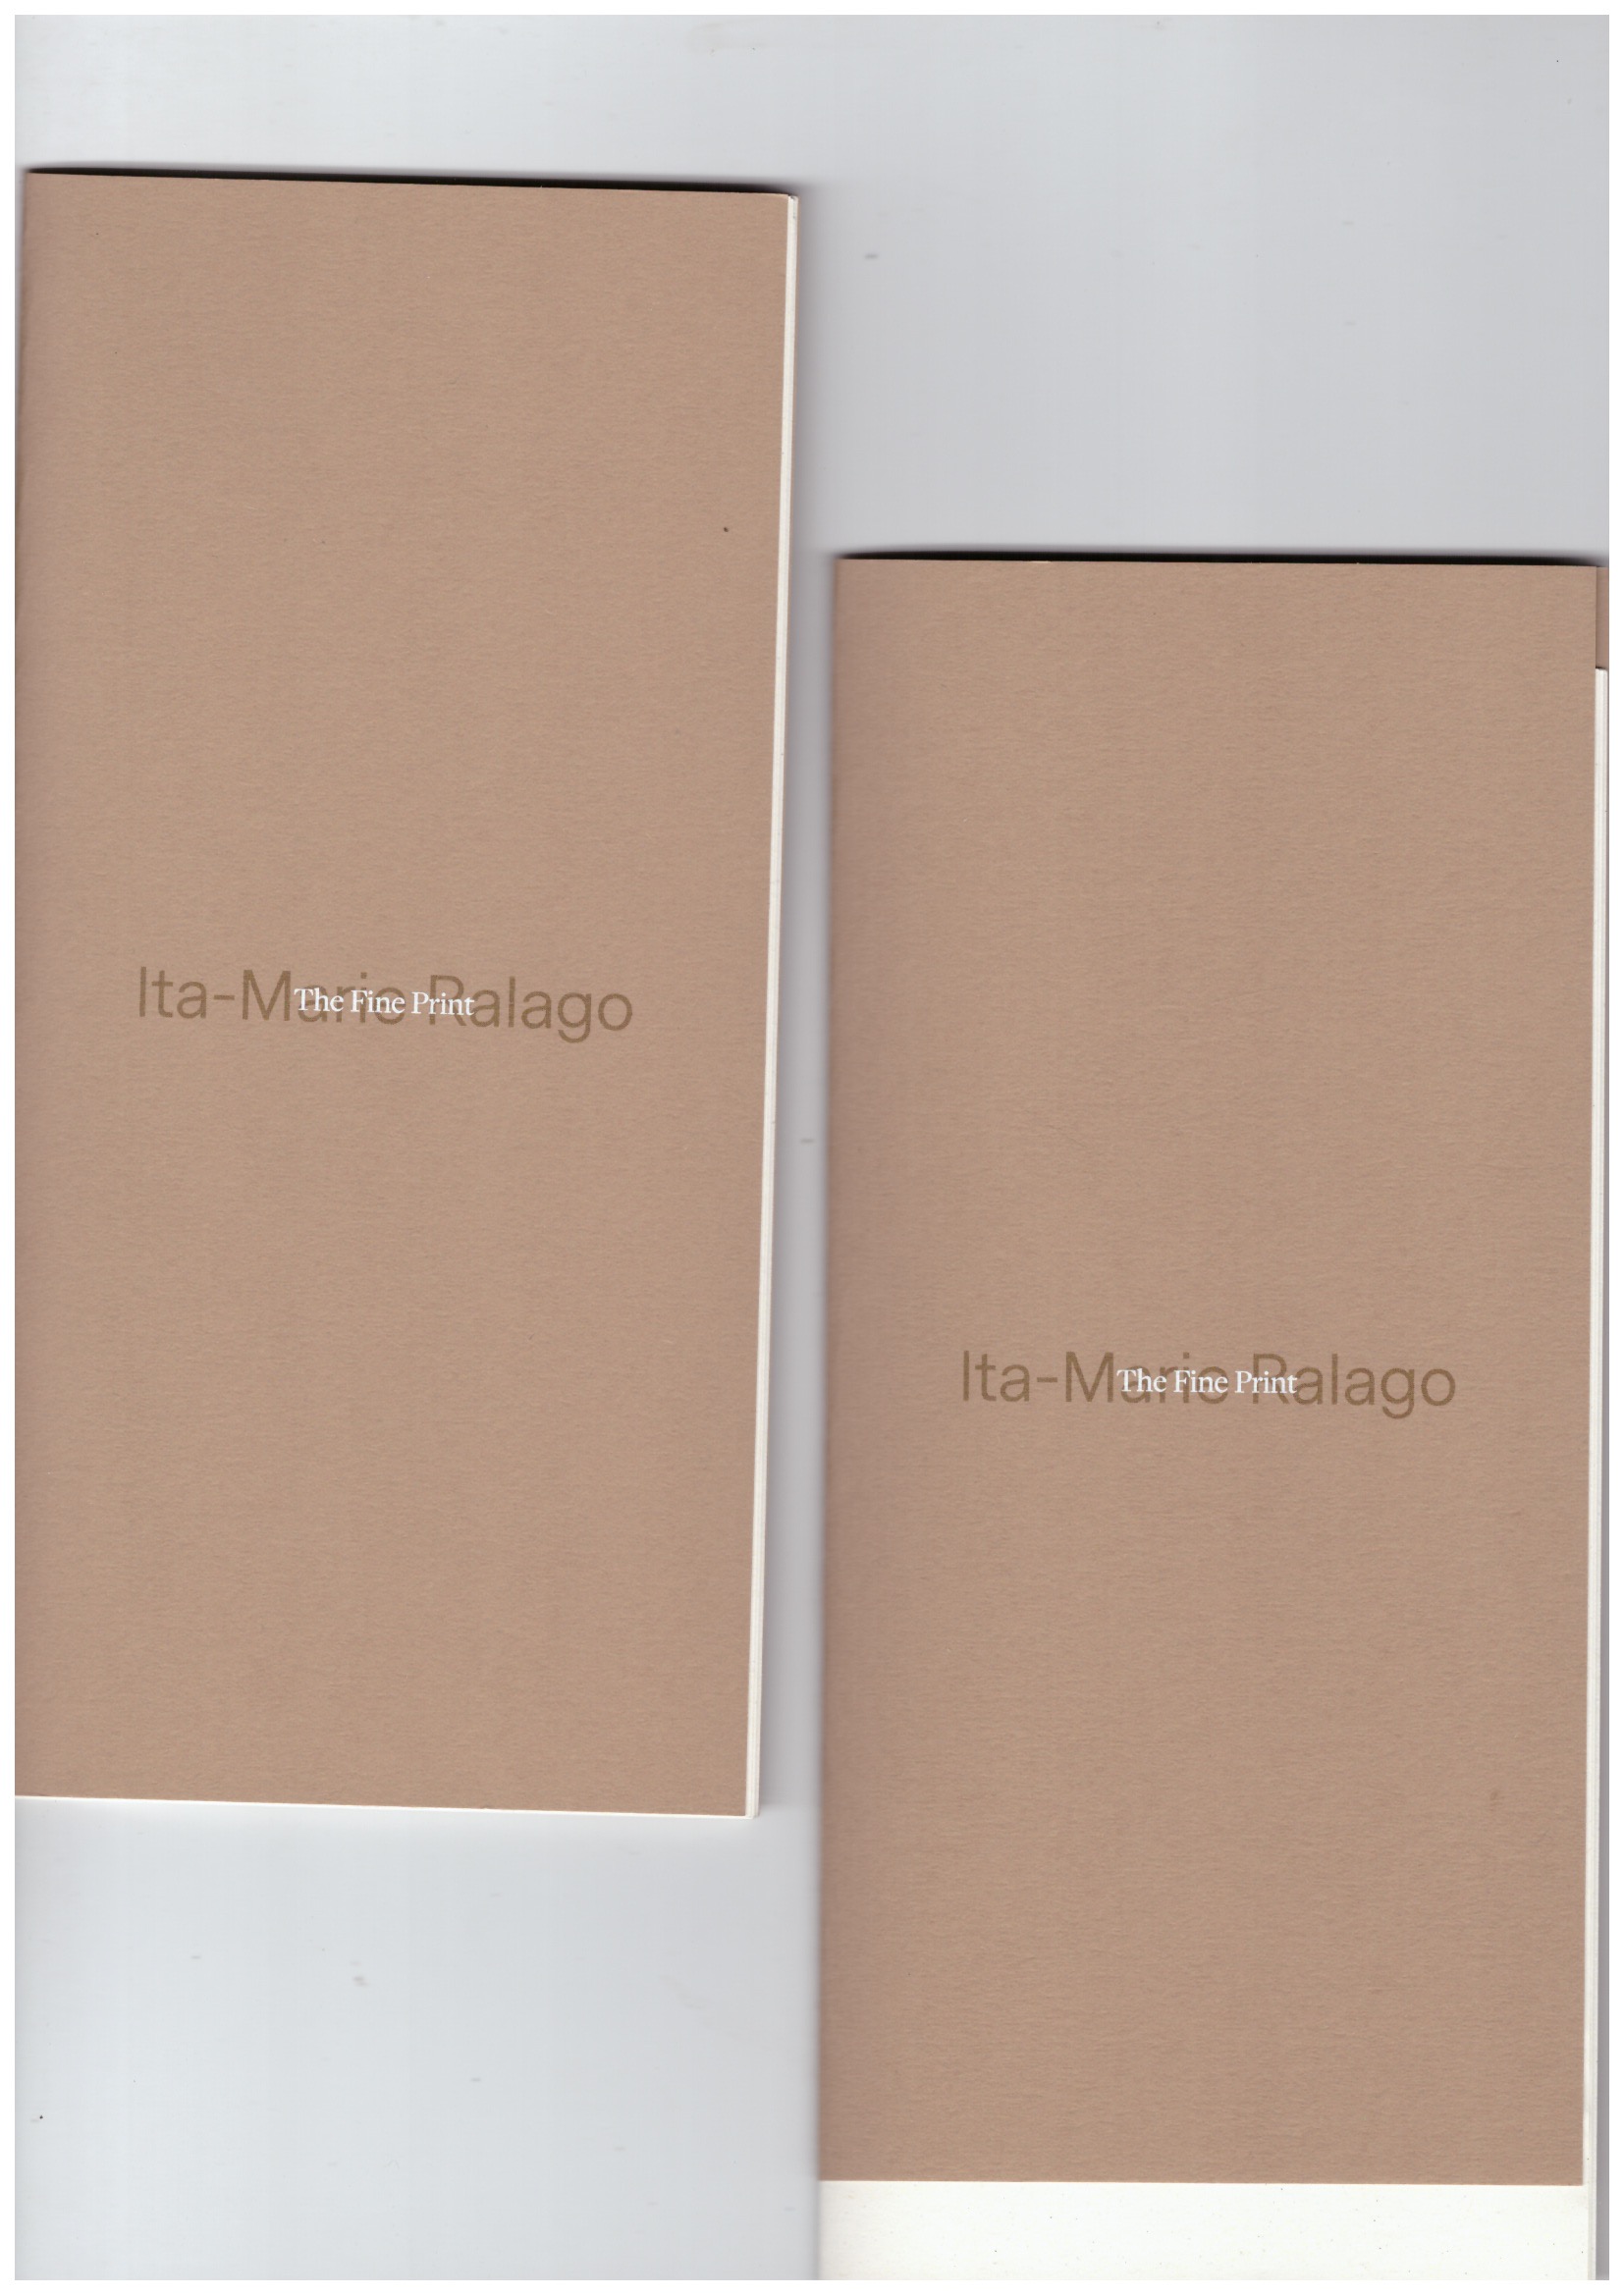 RALAGO, Ita-Mari - The Fine Print